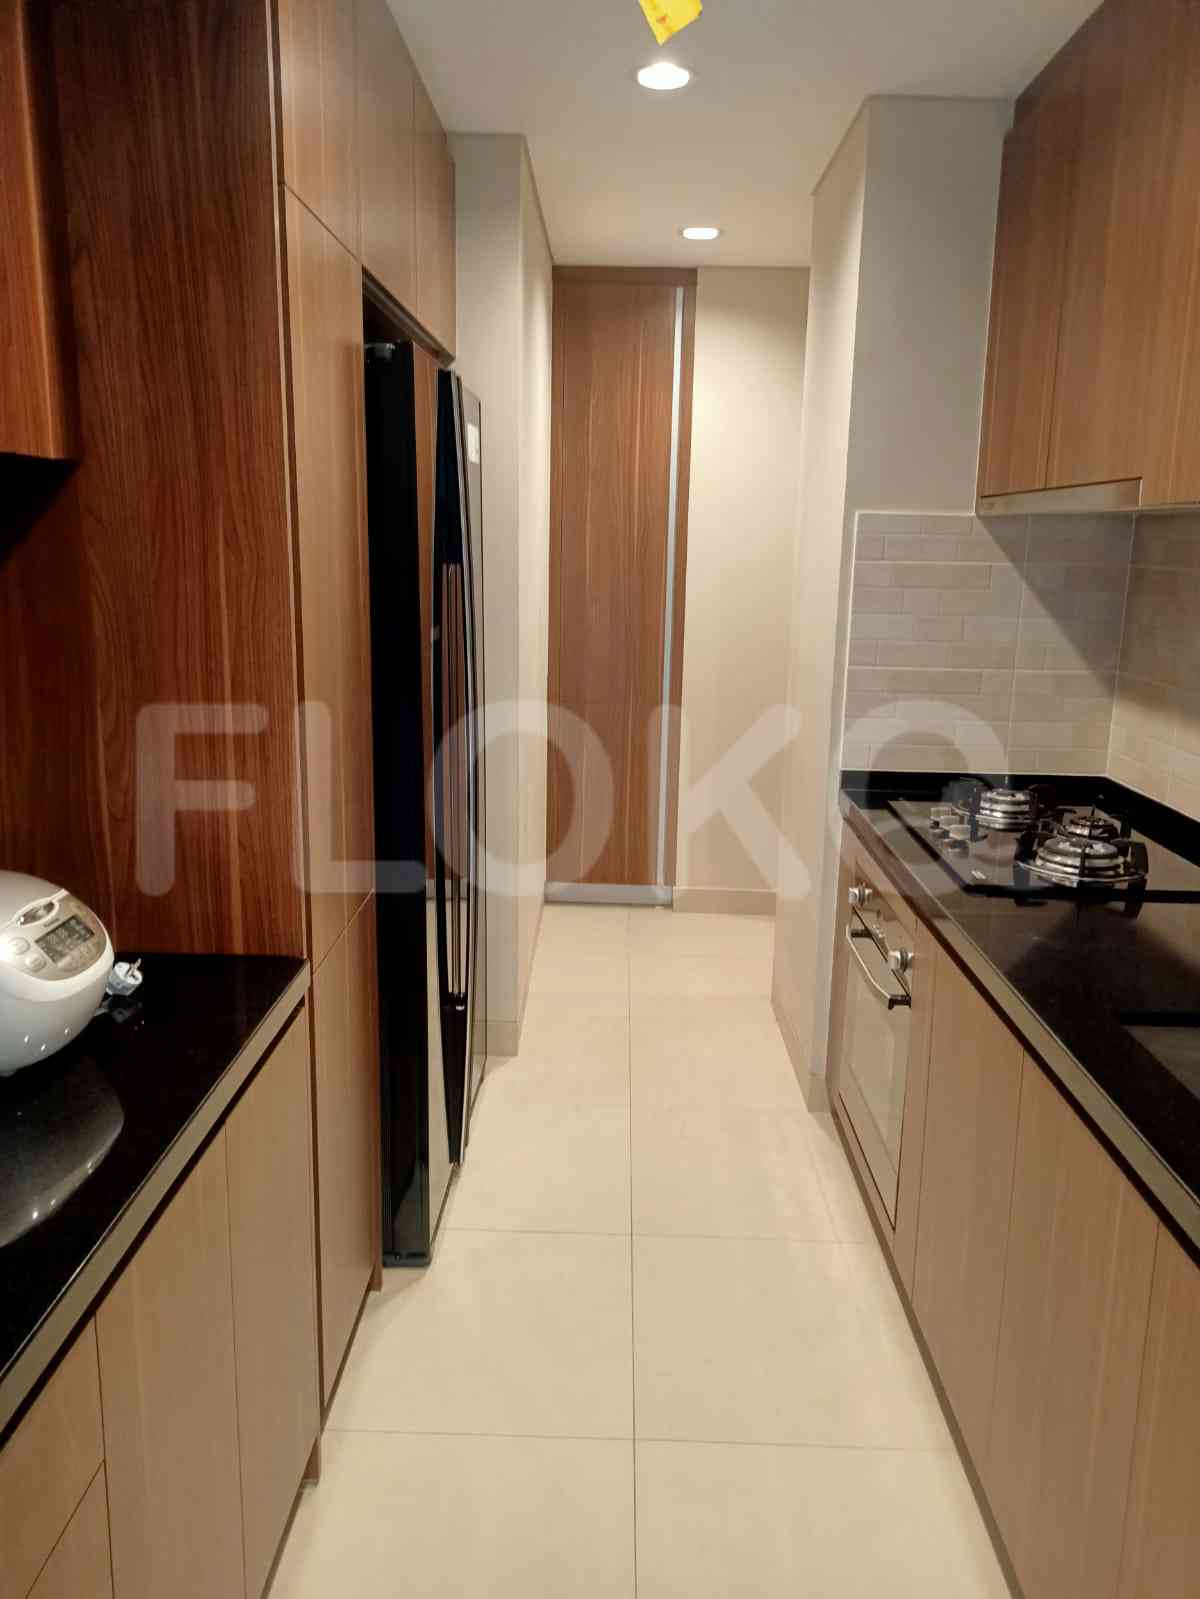 3 Bedroom on 7th Floor for Rent in Apartemen Branz Simatupang - ftb893 6